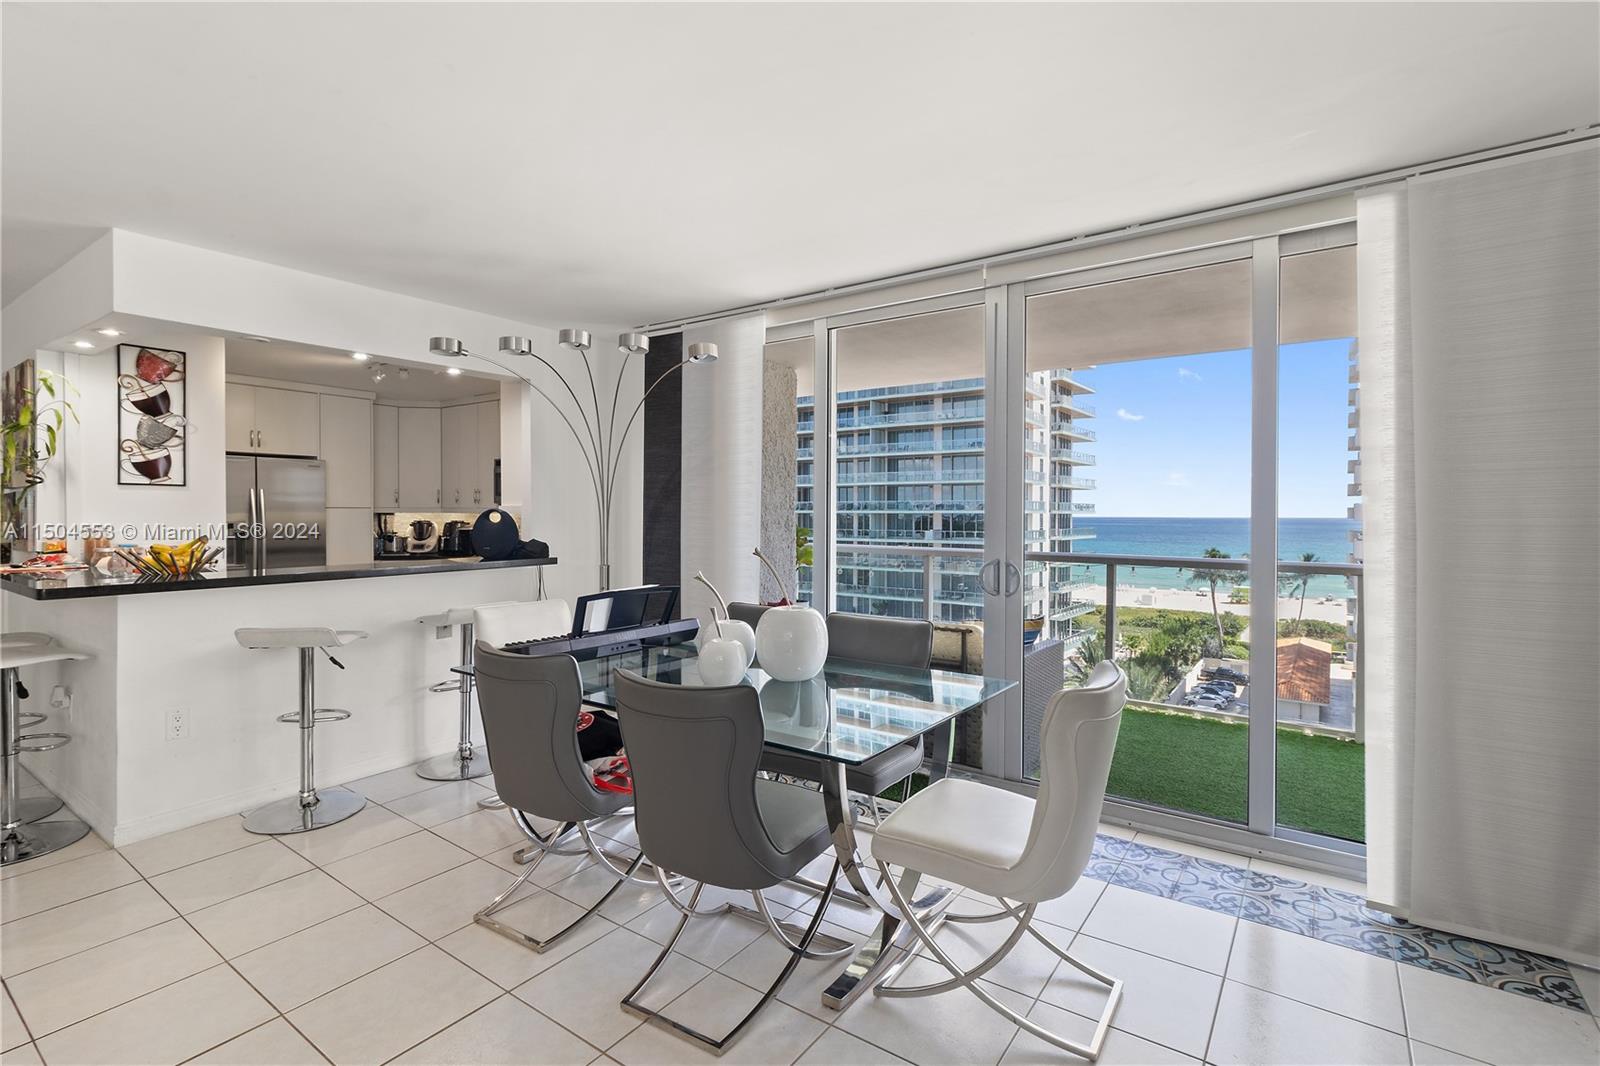 Property for Sale at 5750 Collins Ave 9A, Miami Beach, Miami-Dade County, Florida - Bedrooms: 2 
Bathrooms: 2  - $698,900